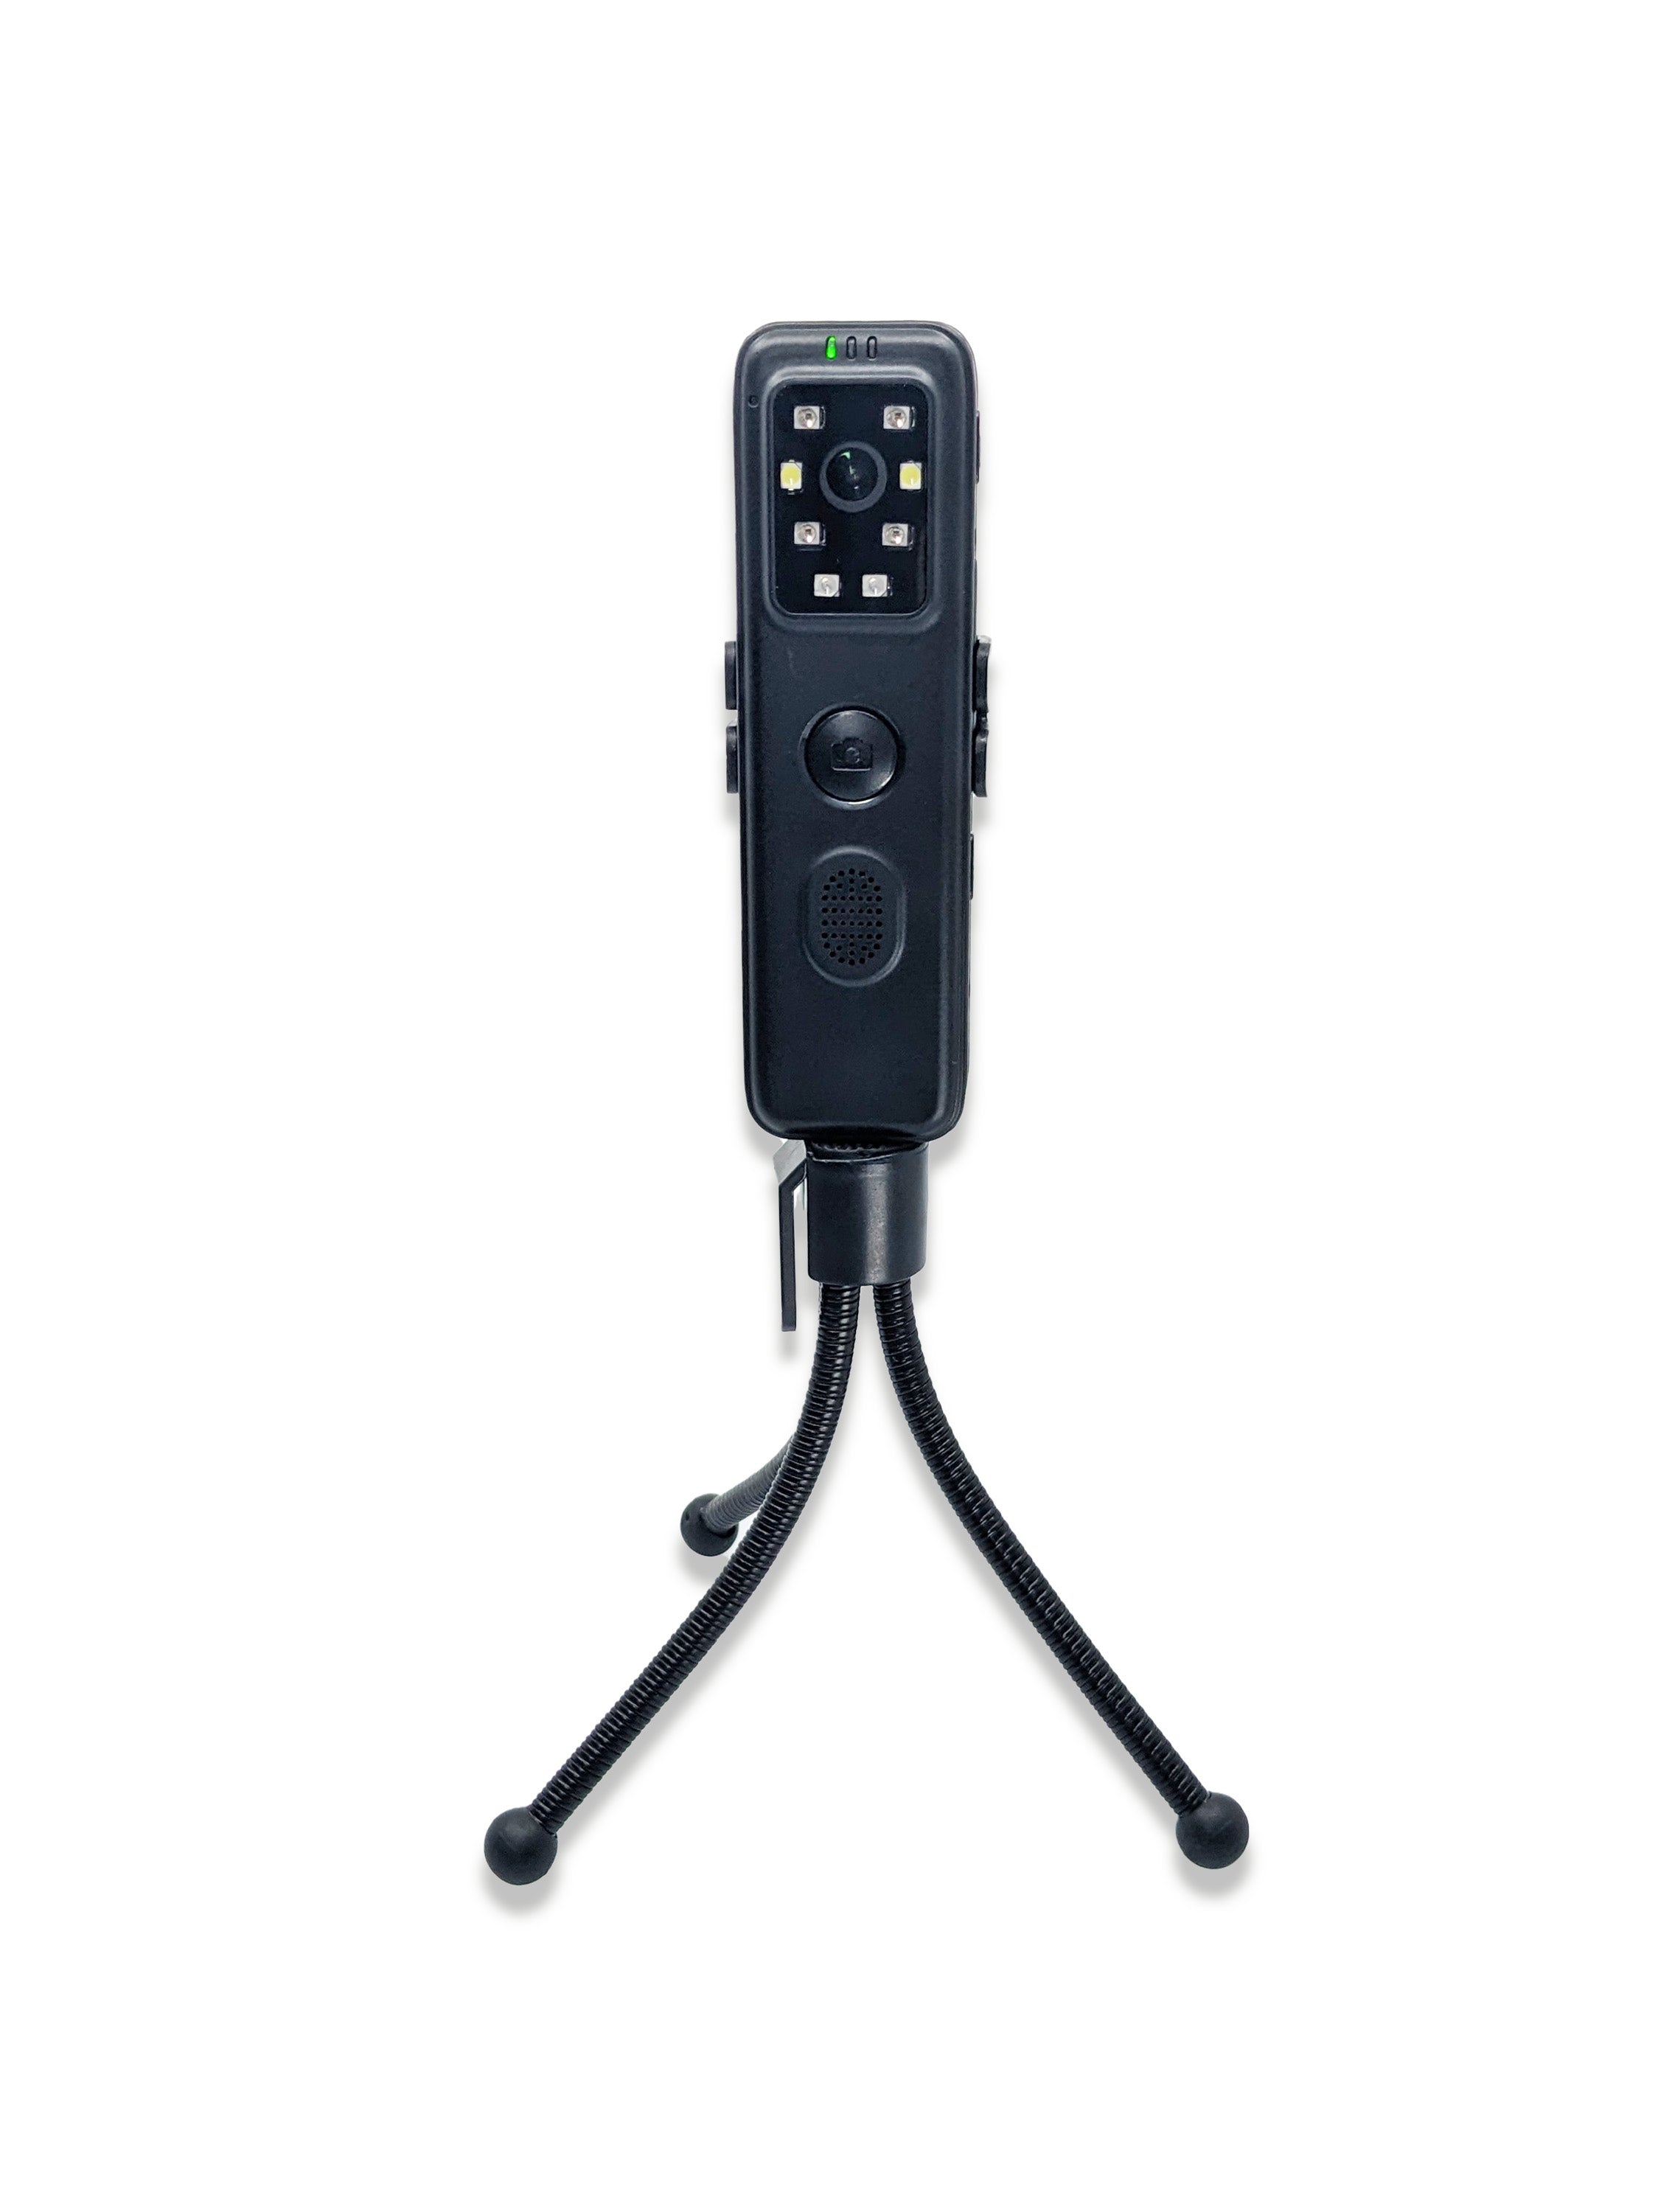 Accuratus S02 - Portable Wearable Video Recorder / Bodycam